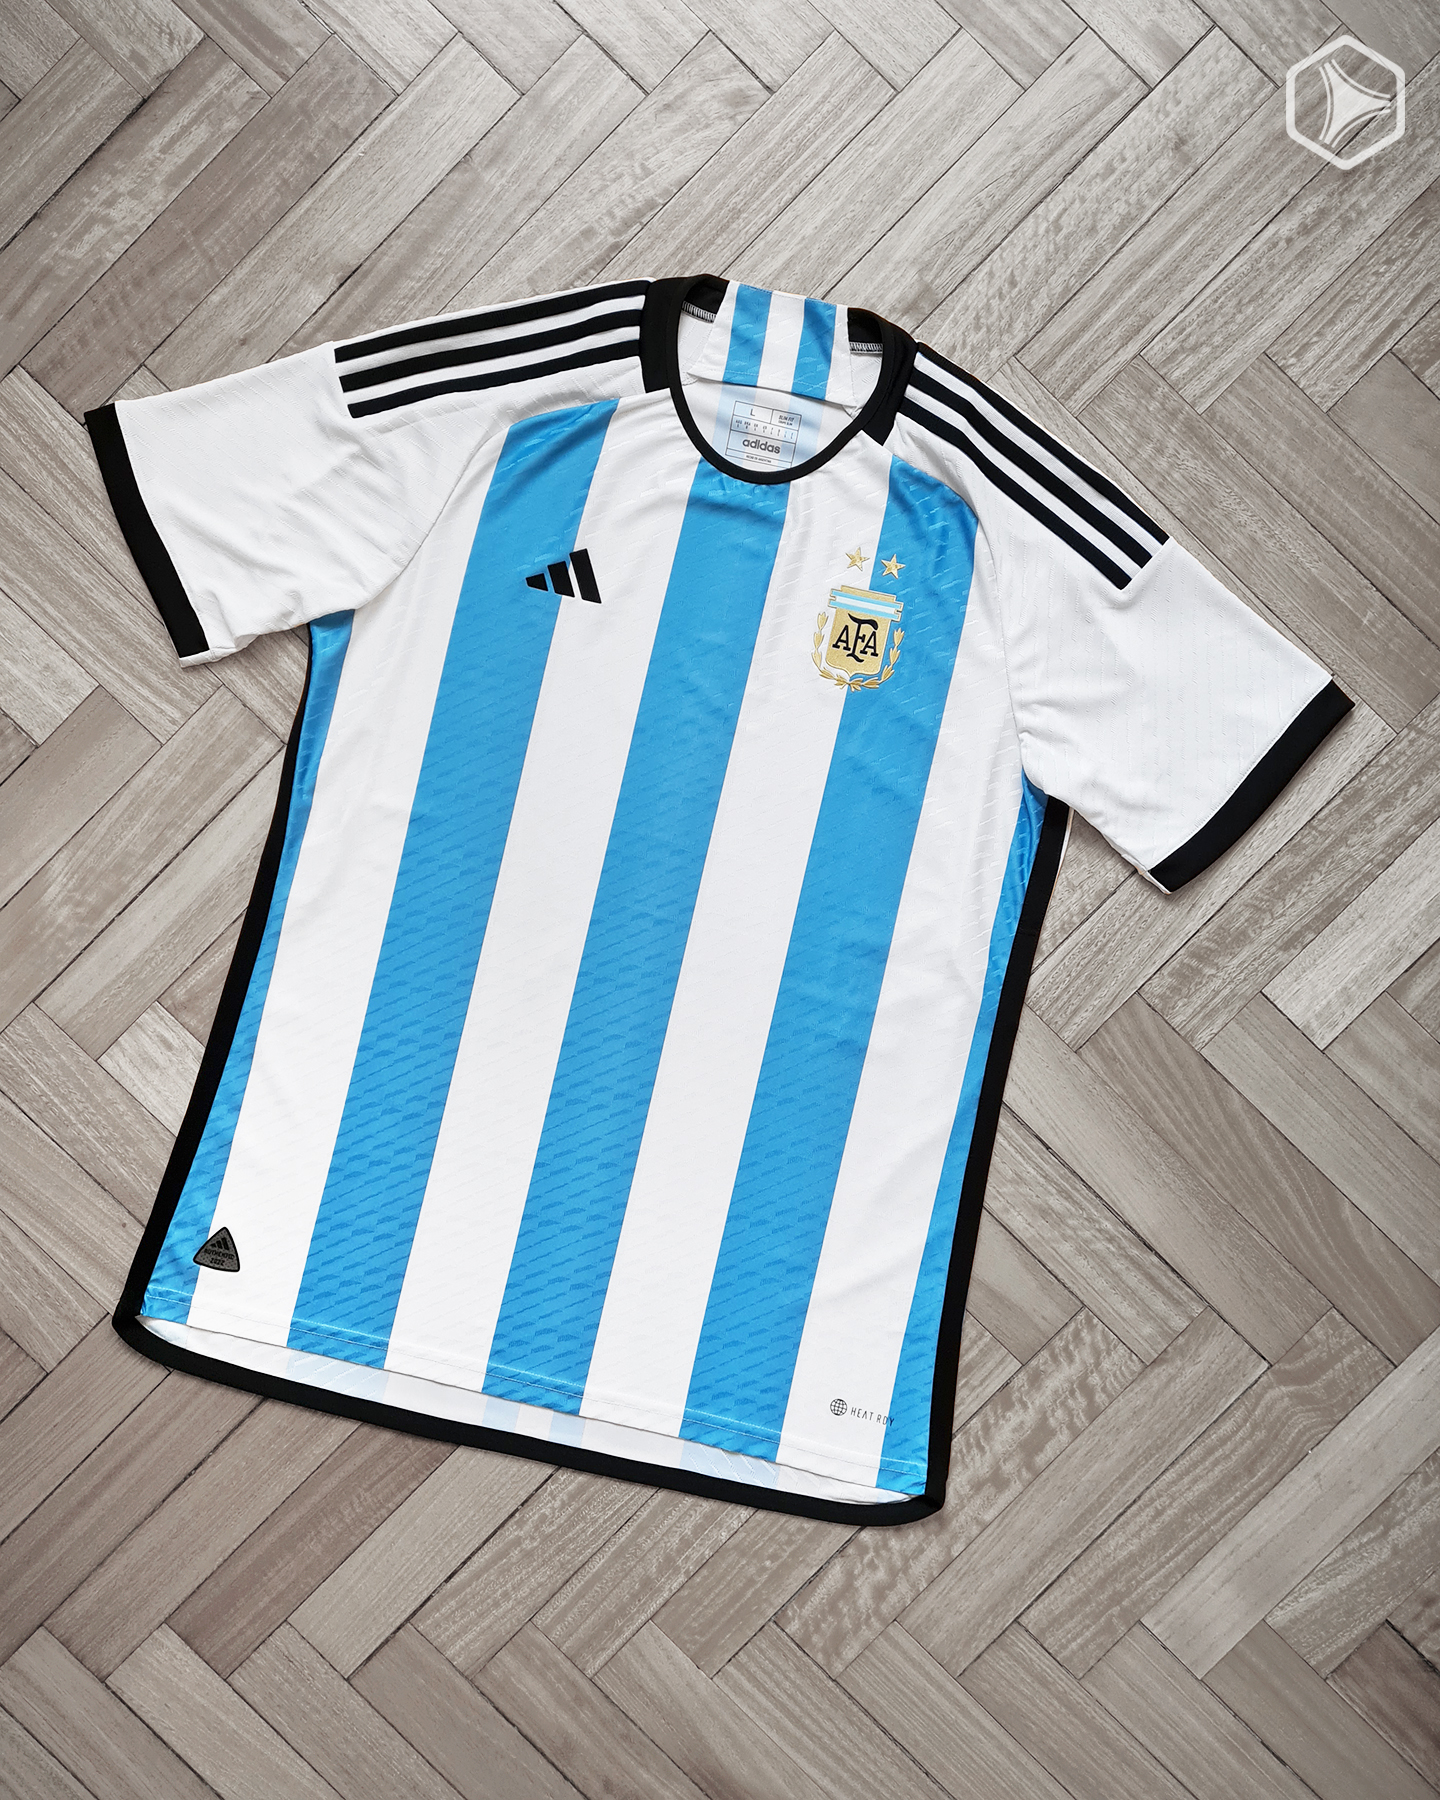 Camiseta adidas de Argentina Copa del Mundo 2022